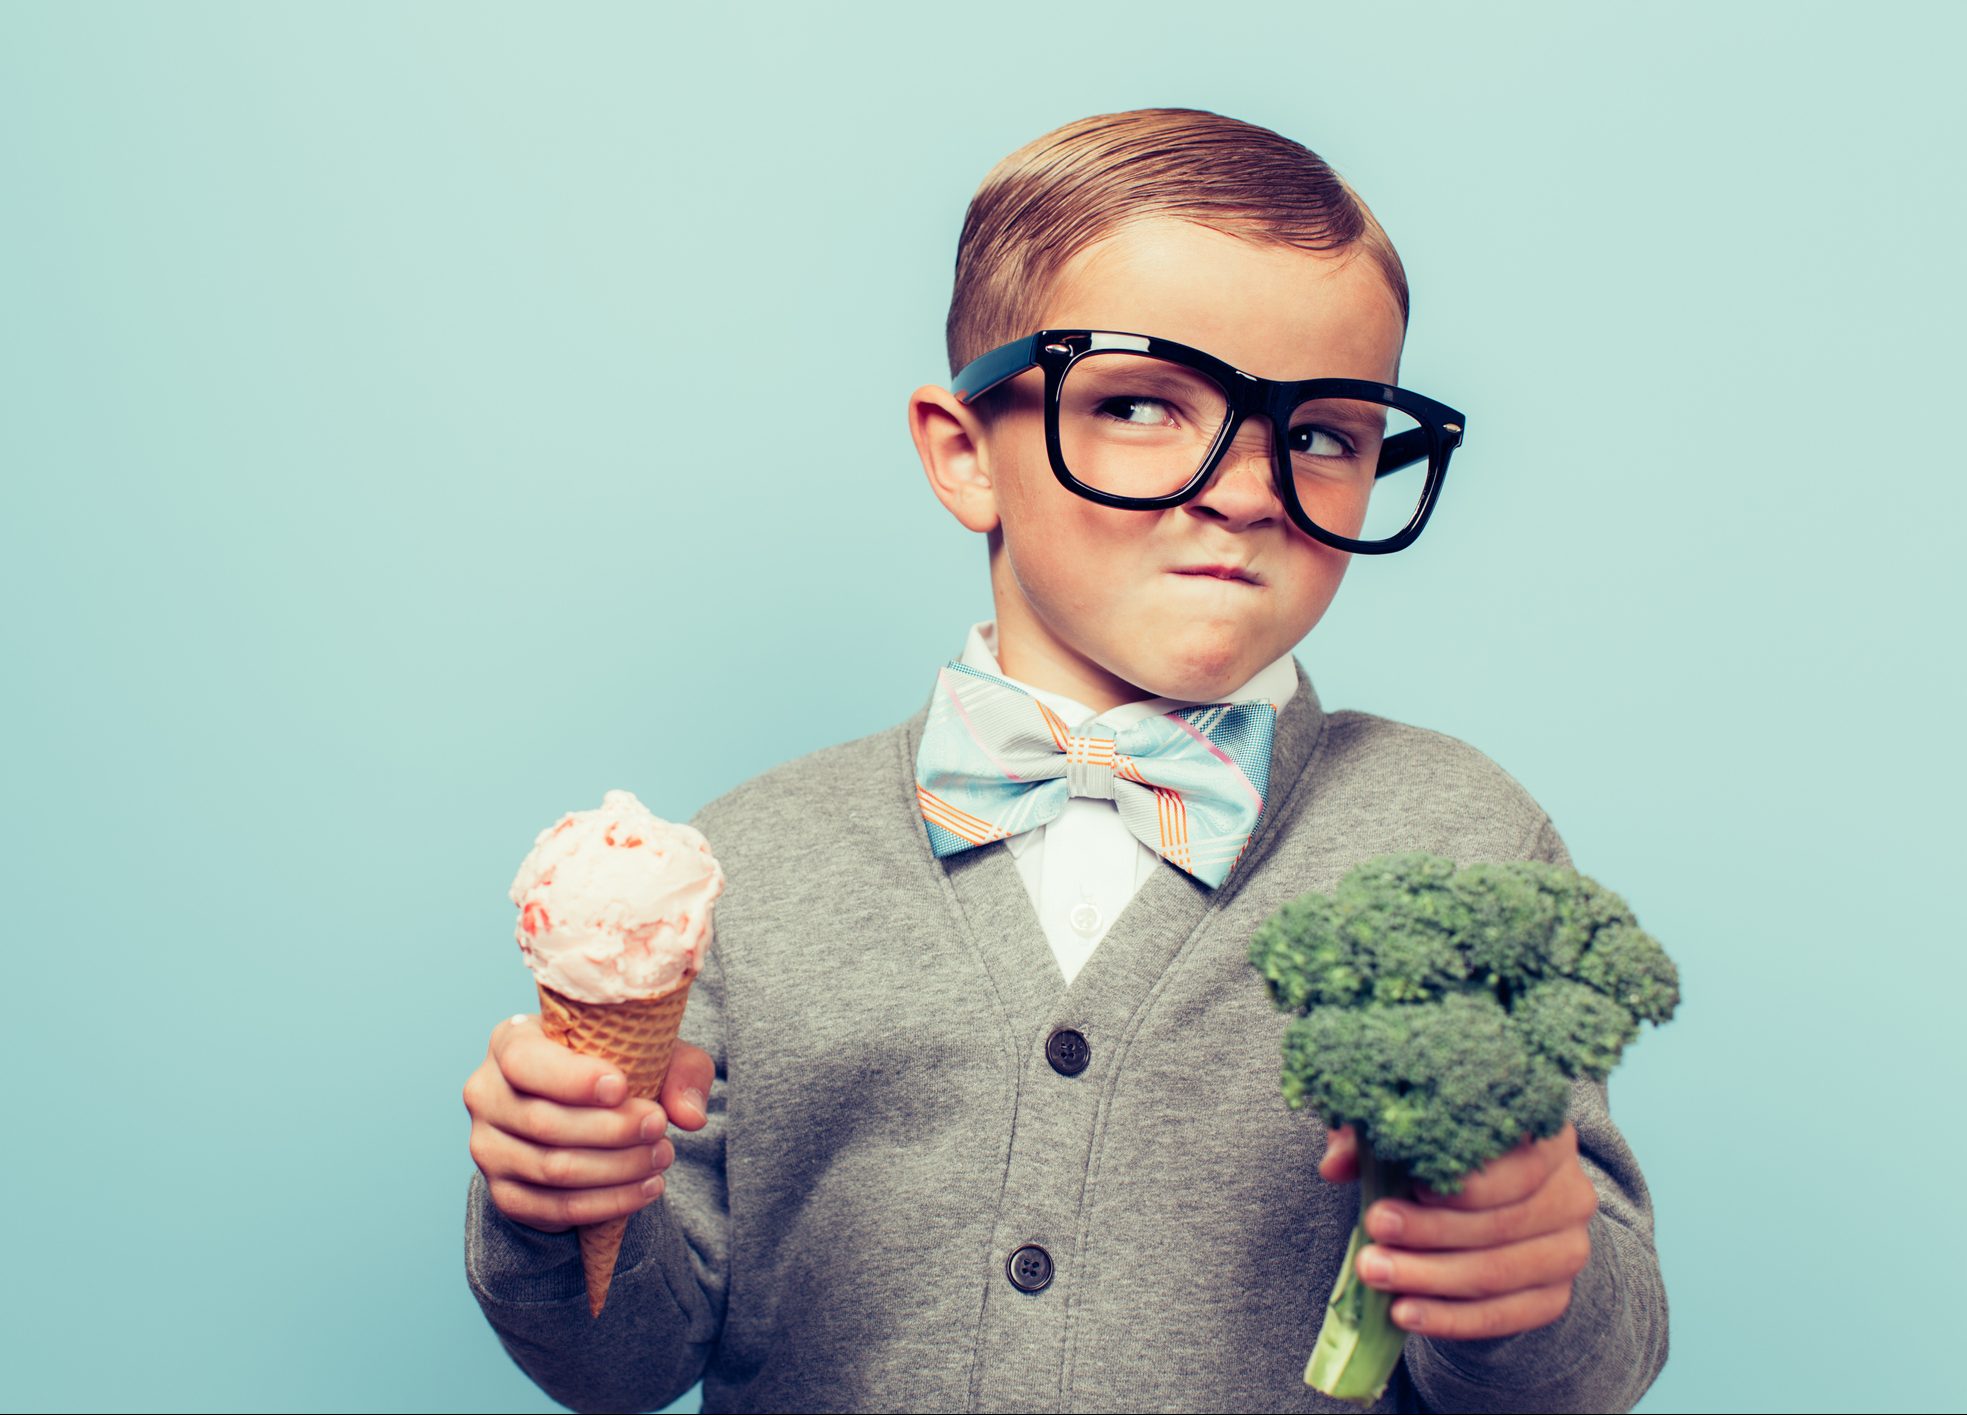 FUNIBER-young-nerd-boy-hates-eating-broccoli